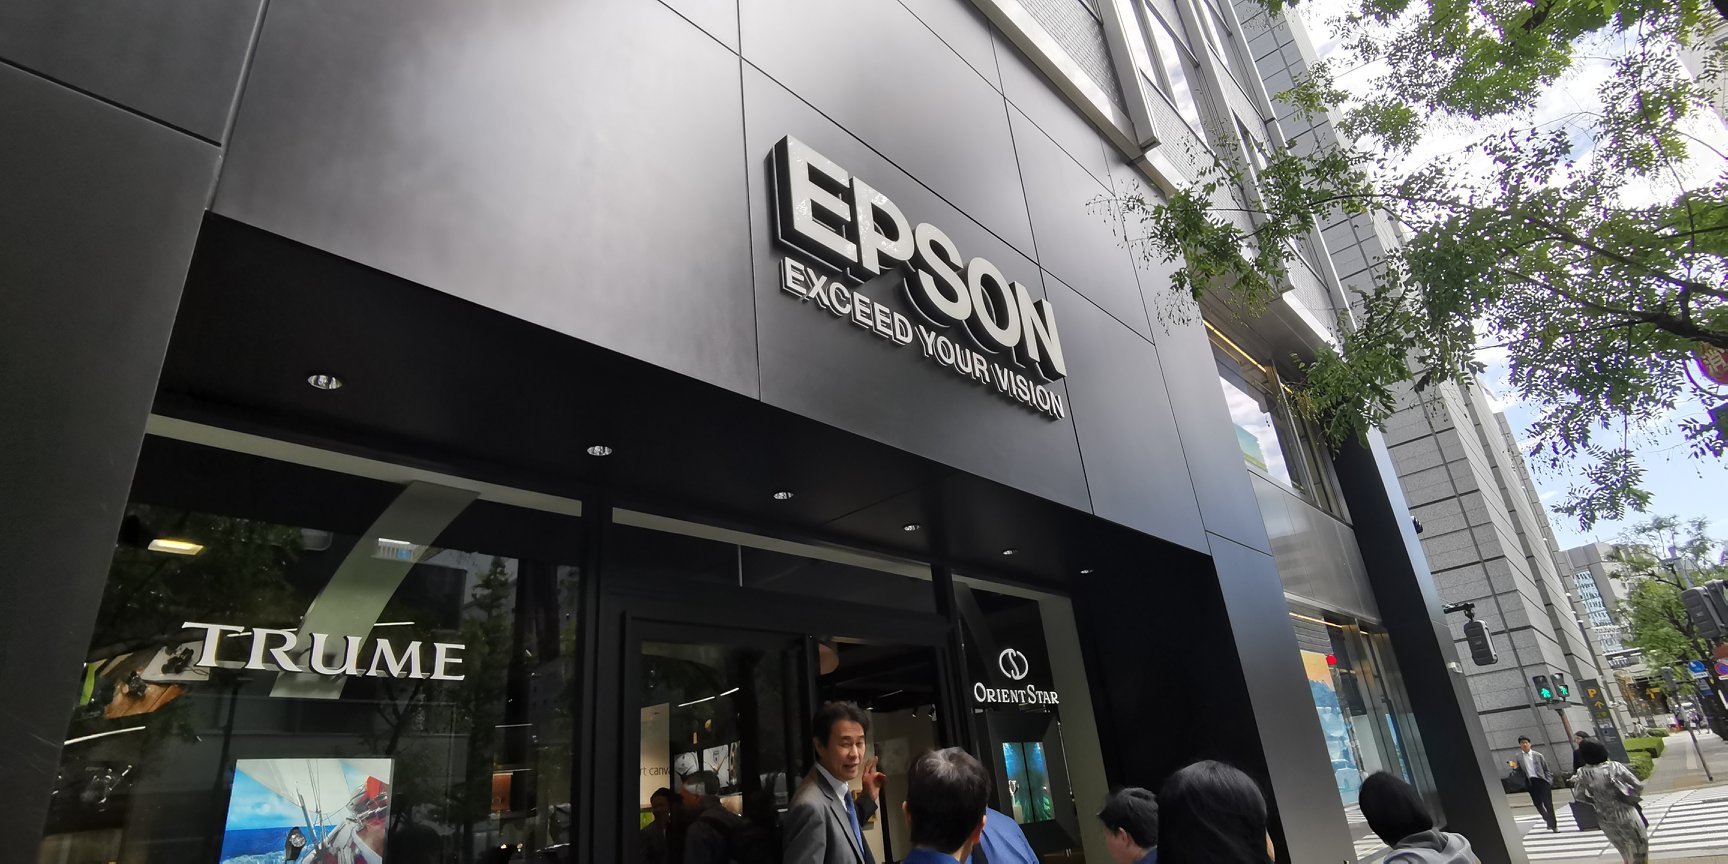 Epson copier machine qualified authorized seller in JB